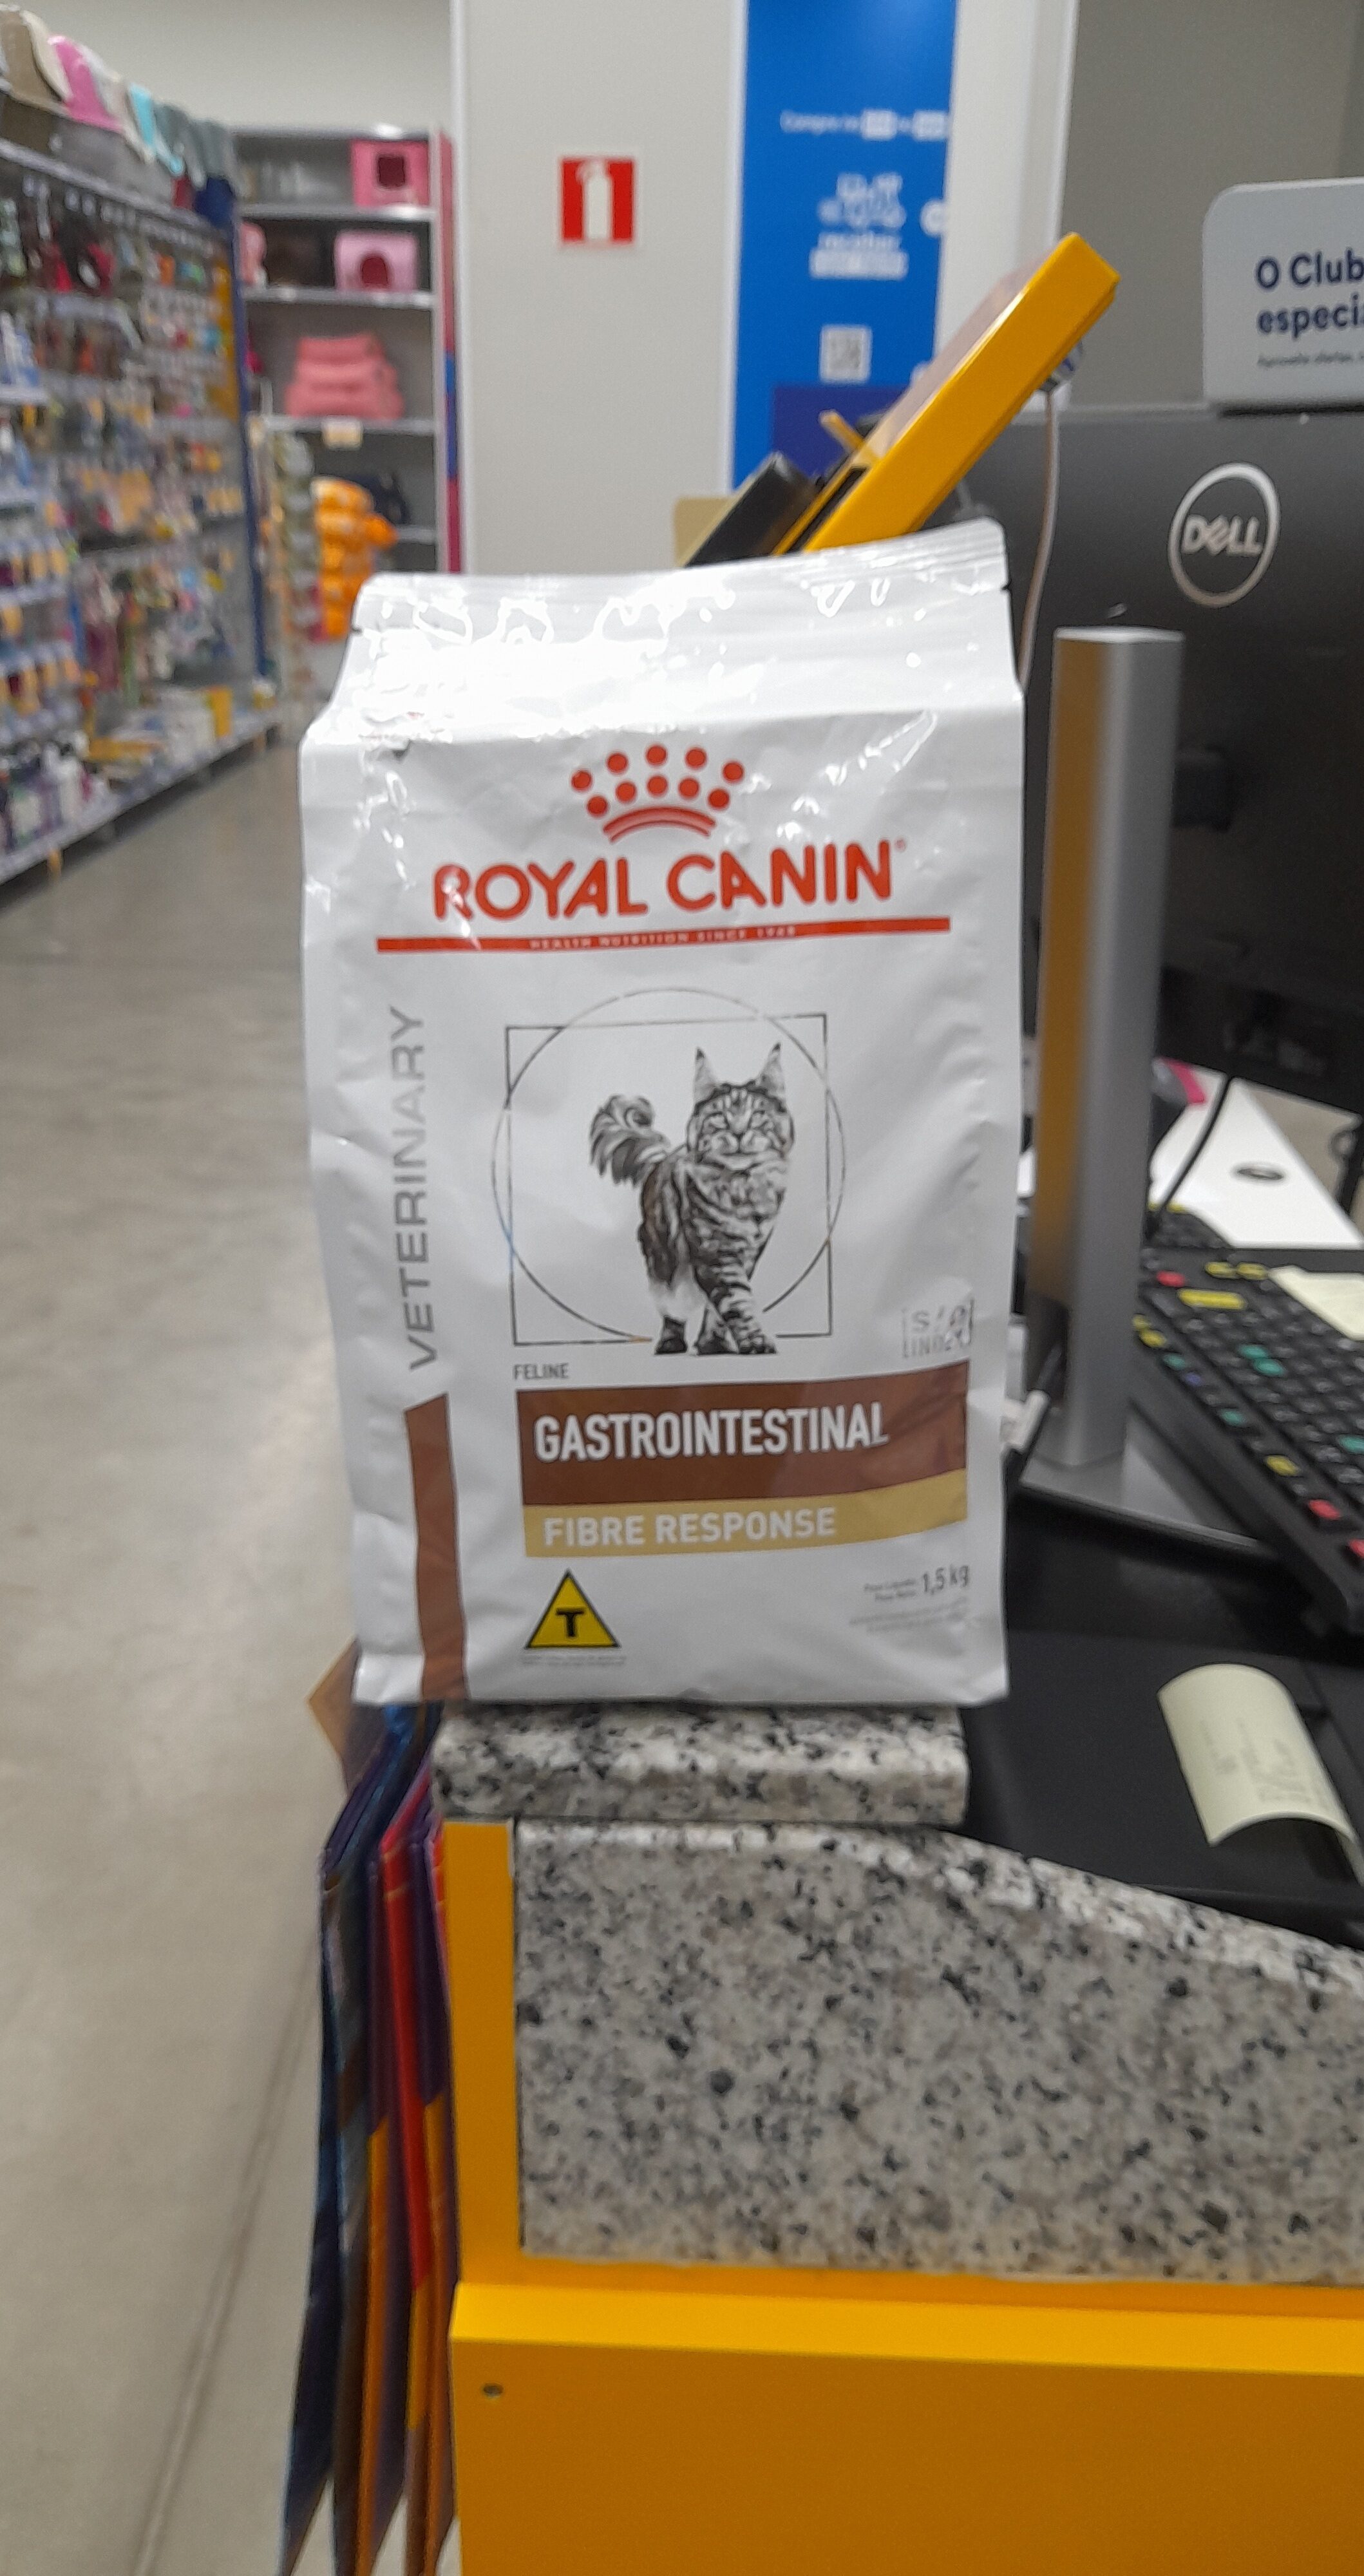 Royal canin gastrointestinal - Product - pt